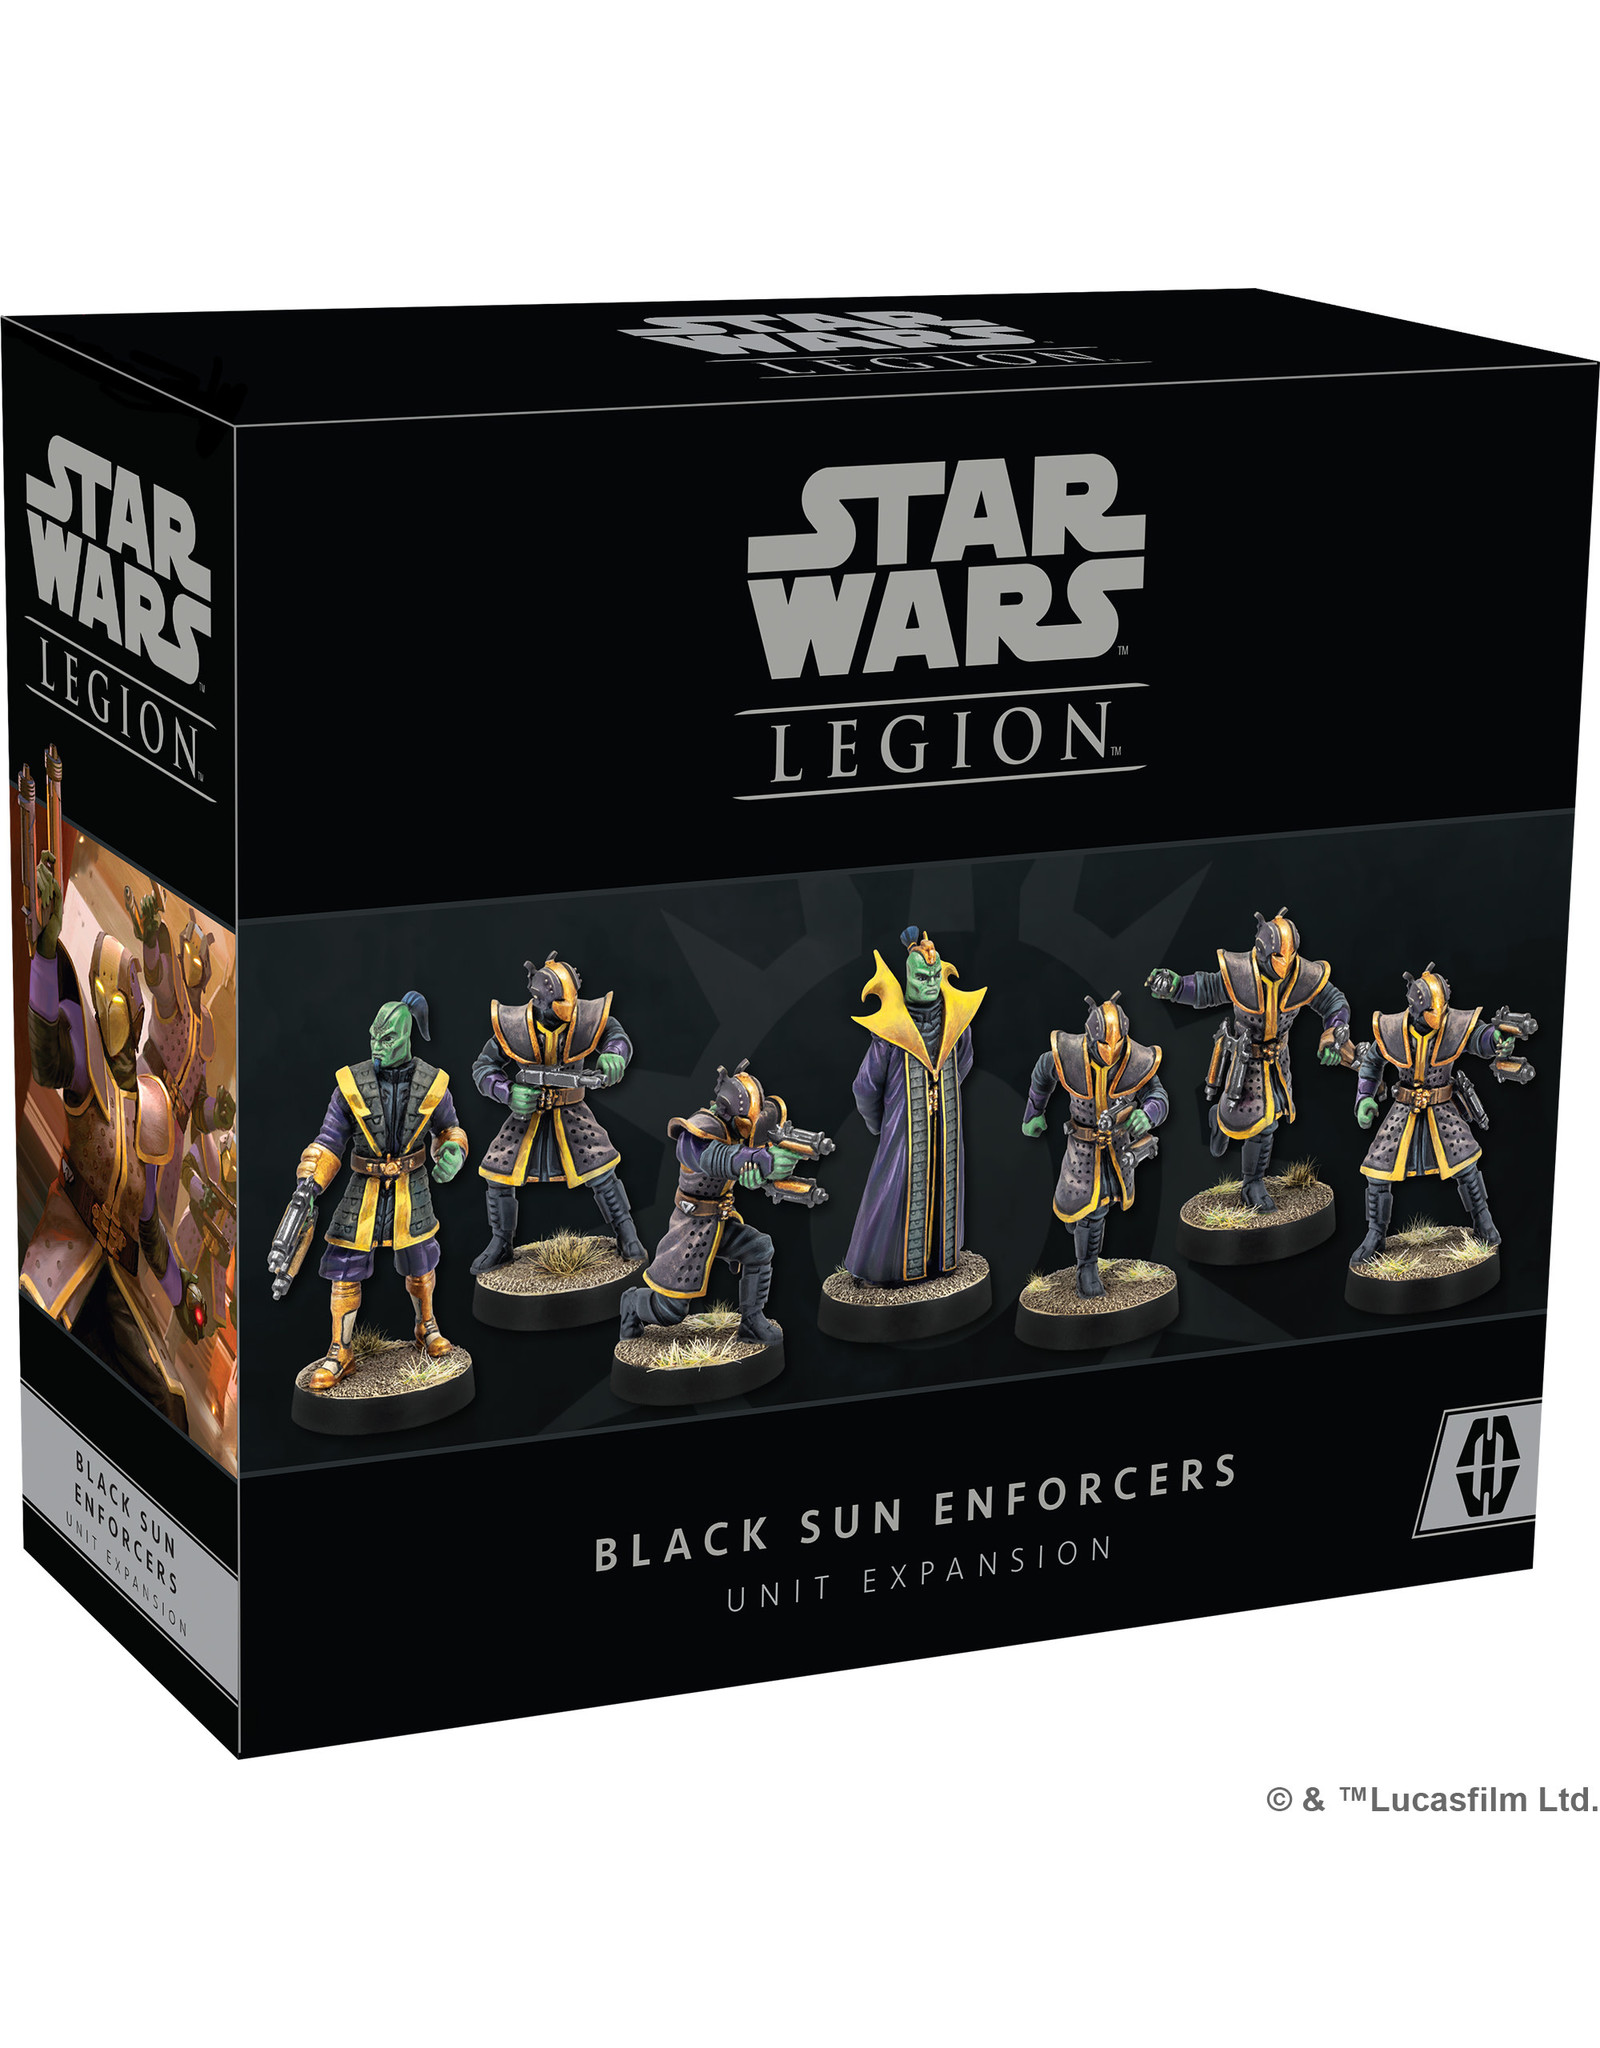 STAR WARS LEGION Star Wars Legion Black Sun Enforcers Unit Expansion